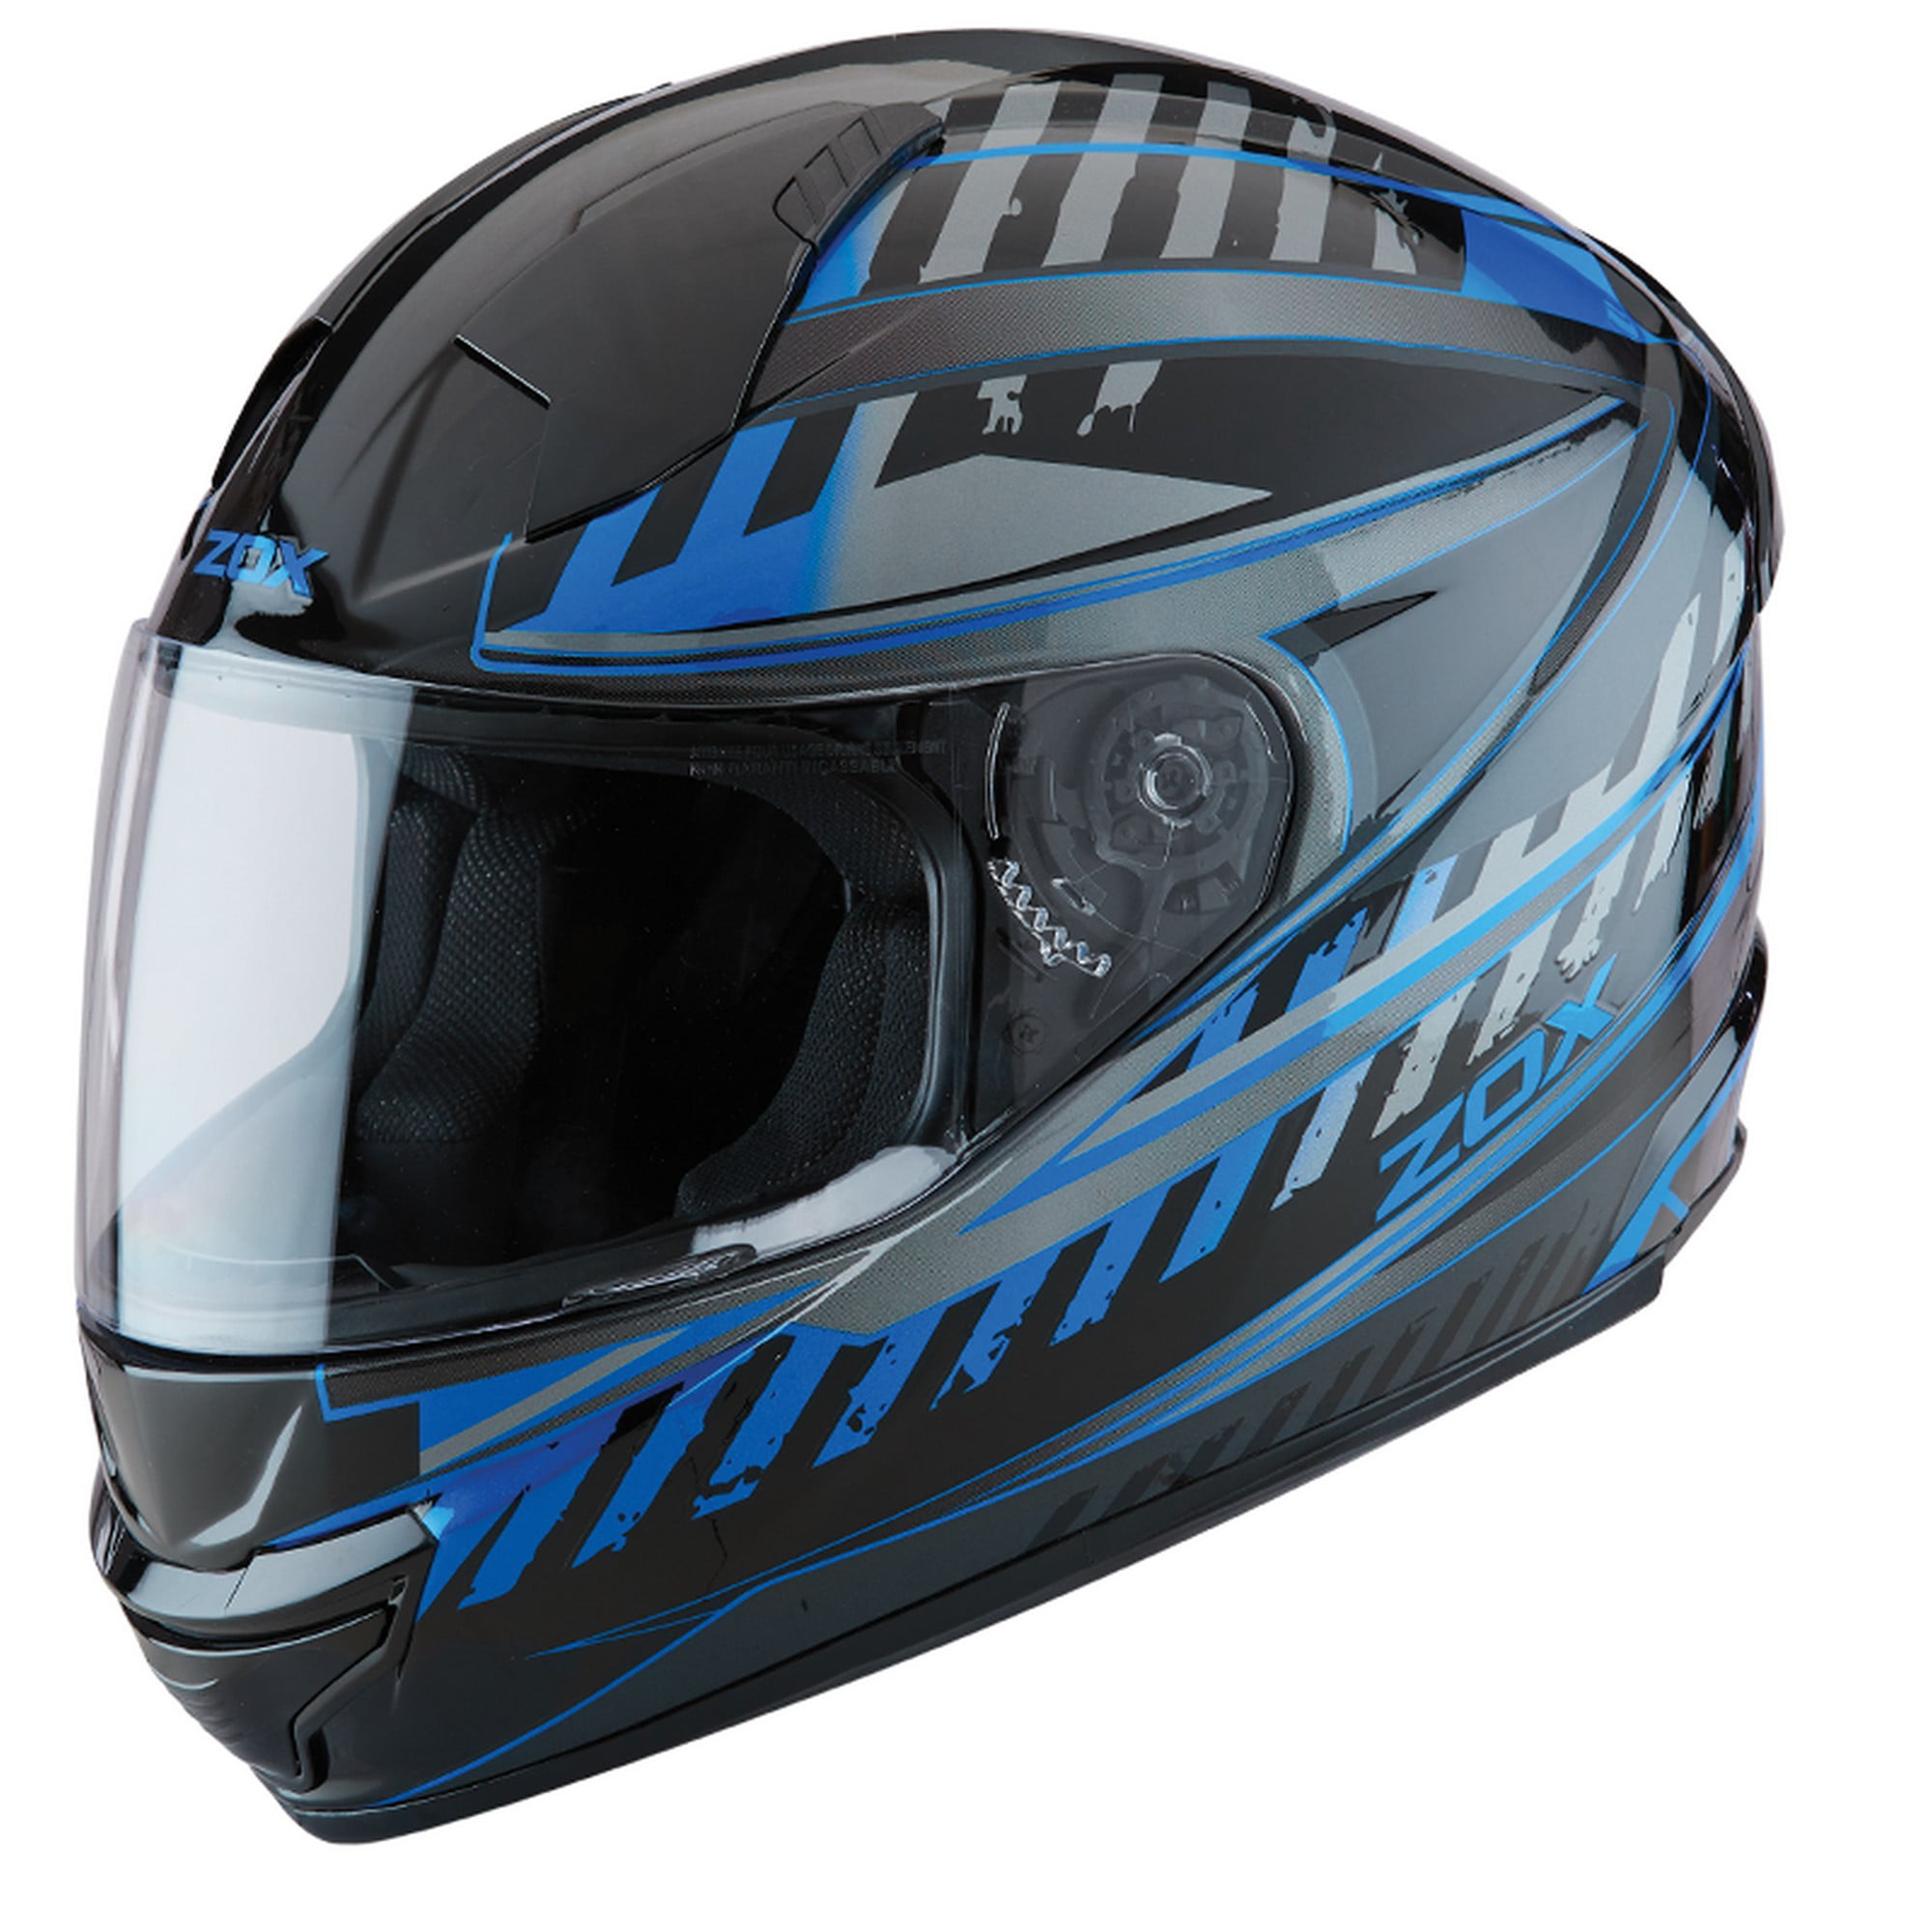 Sticker car motorcycle helmet decal vinyl biker motocross r2